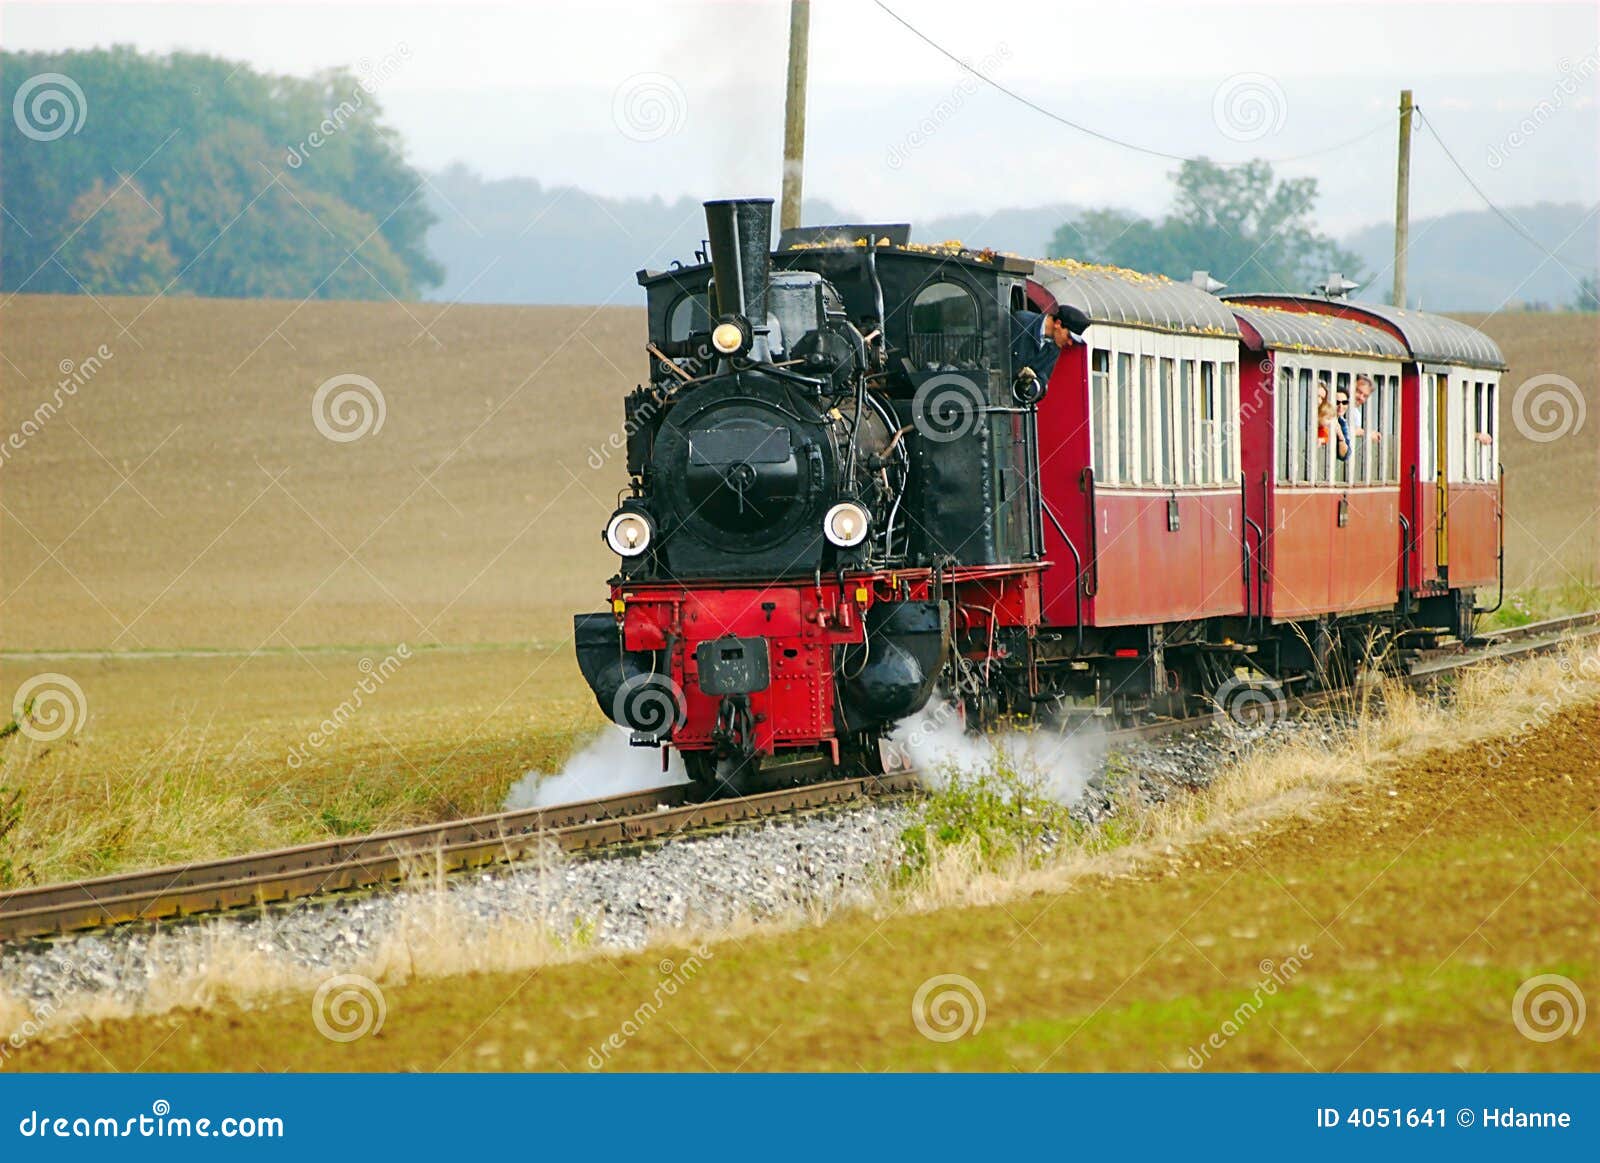 historical train